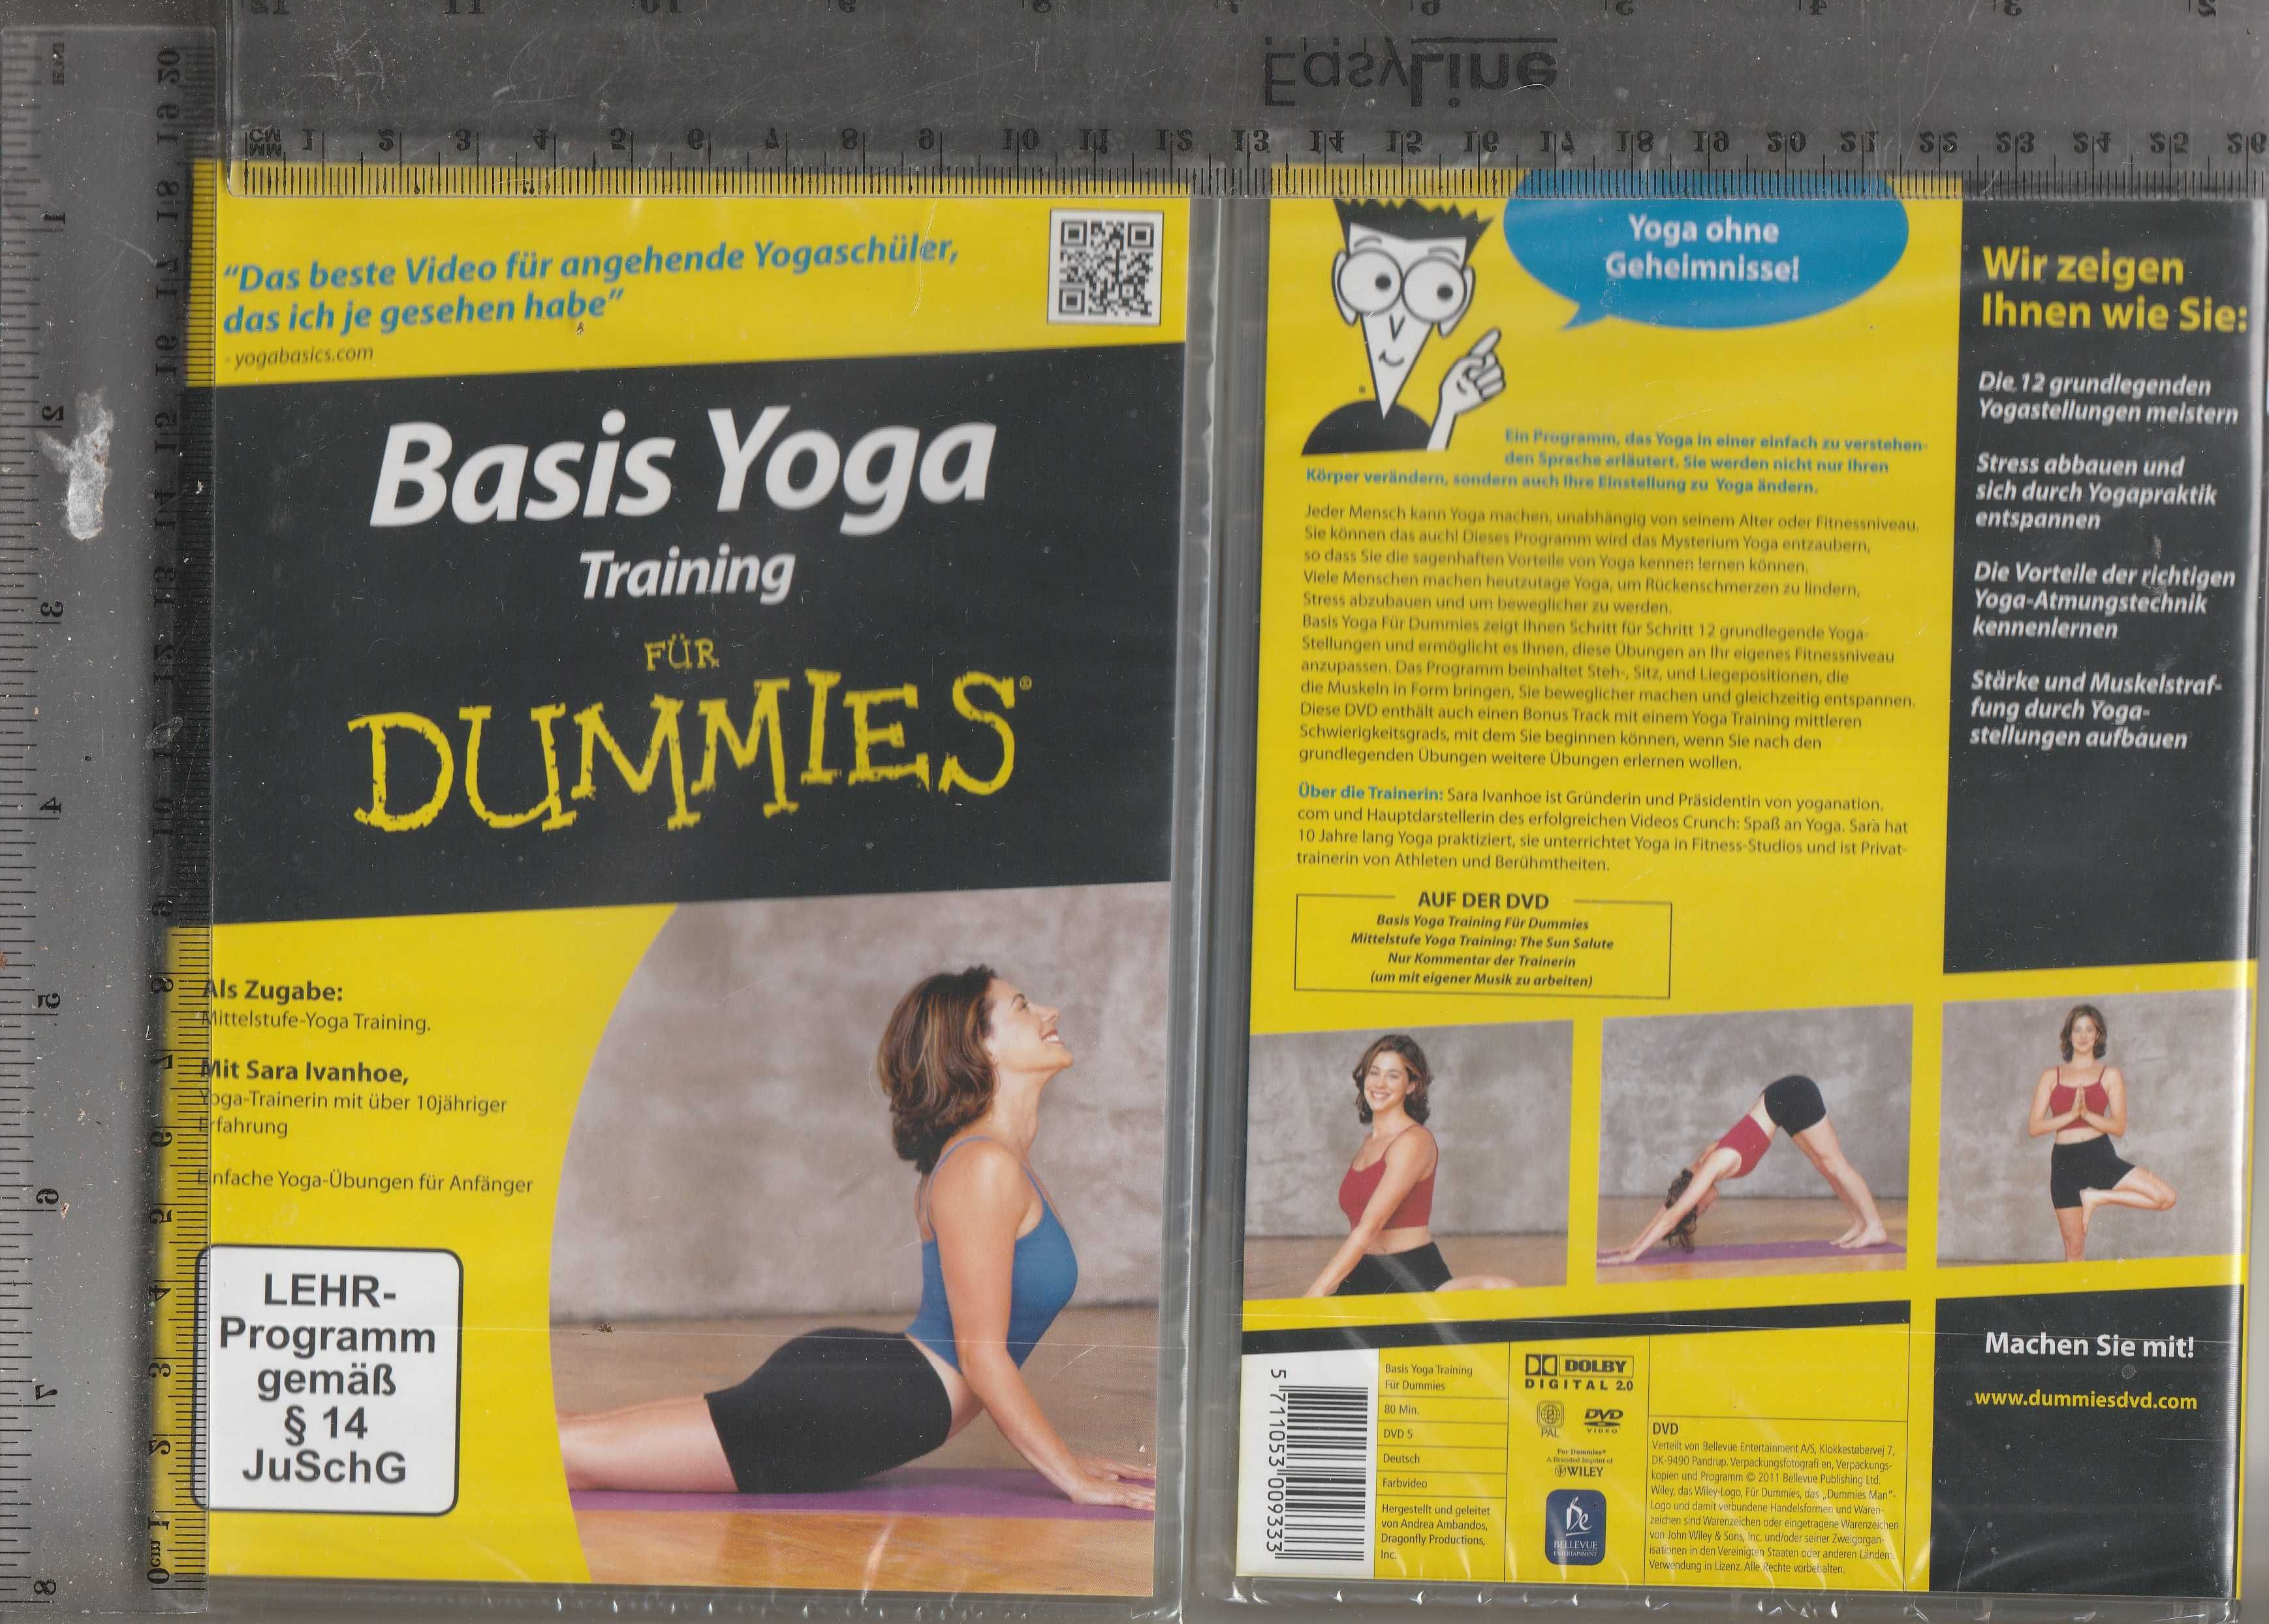 Basis yoga training fur dummies DVD